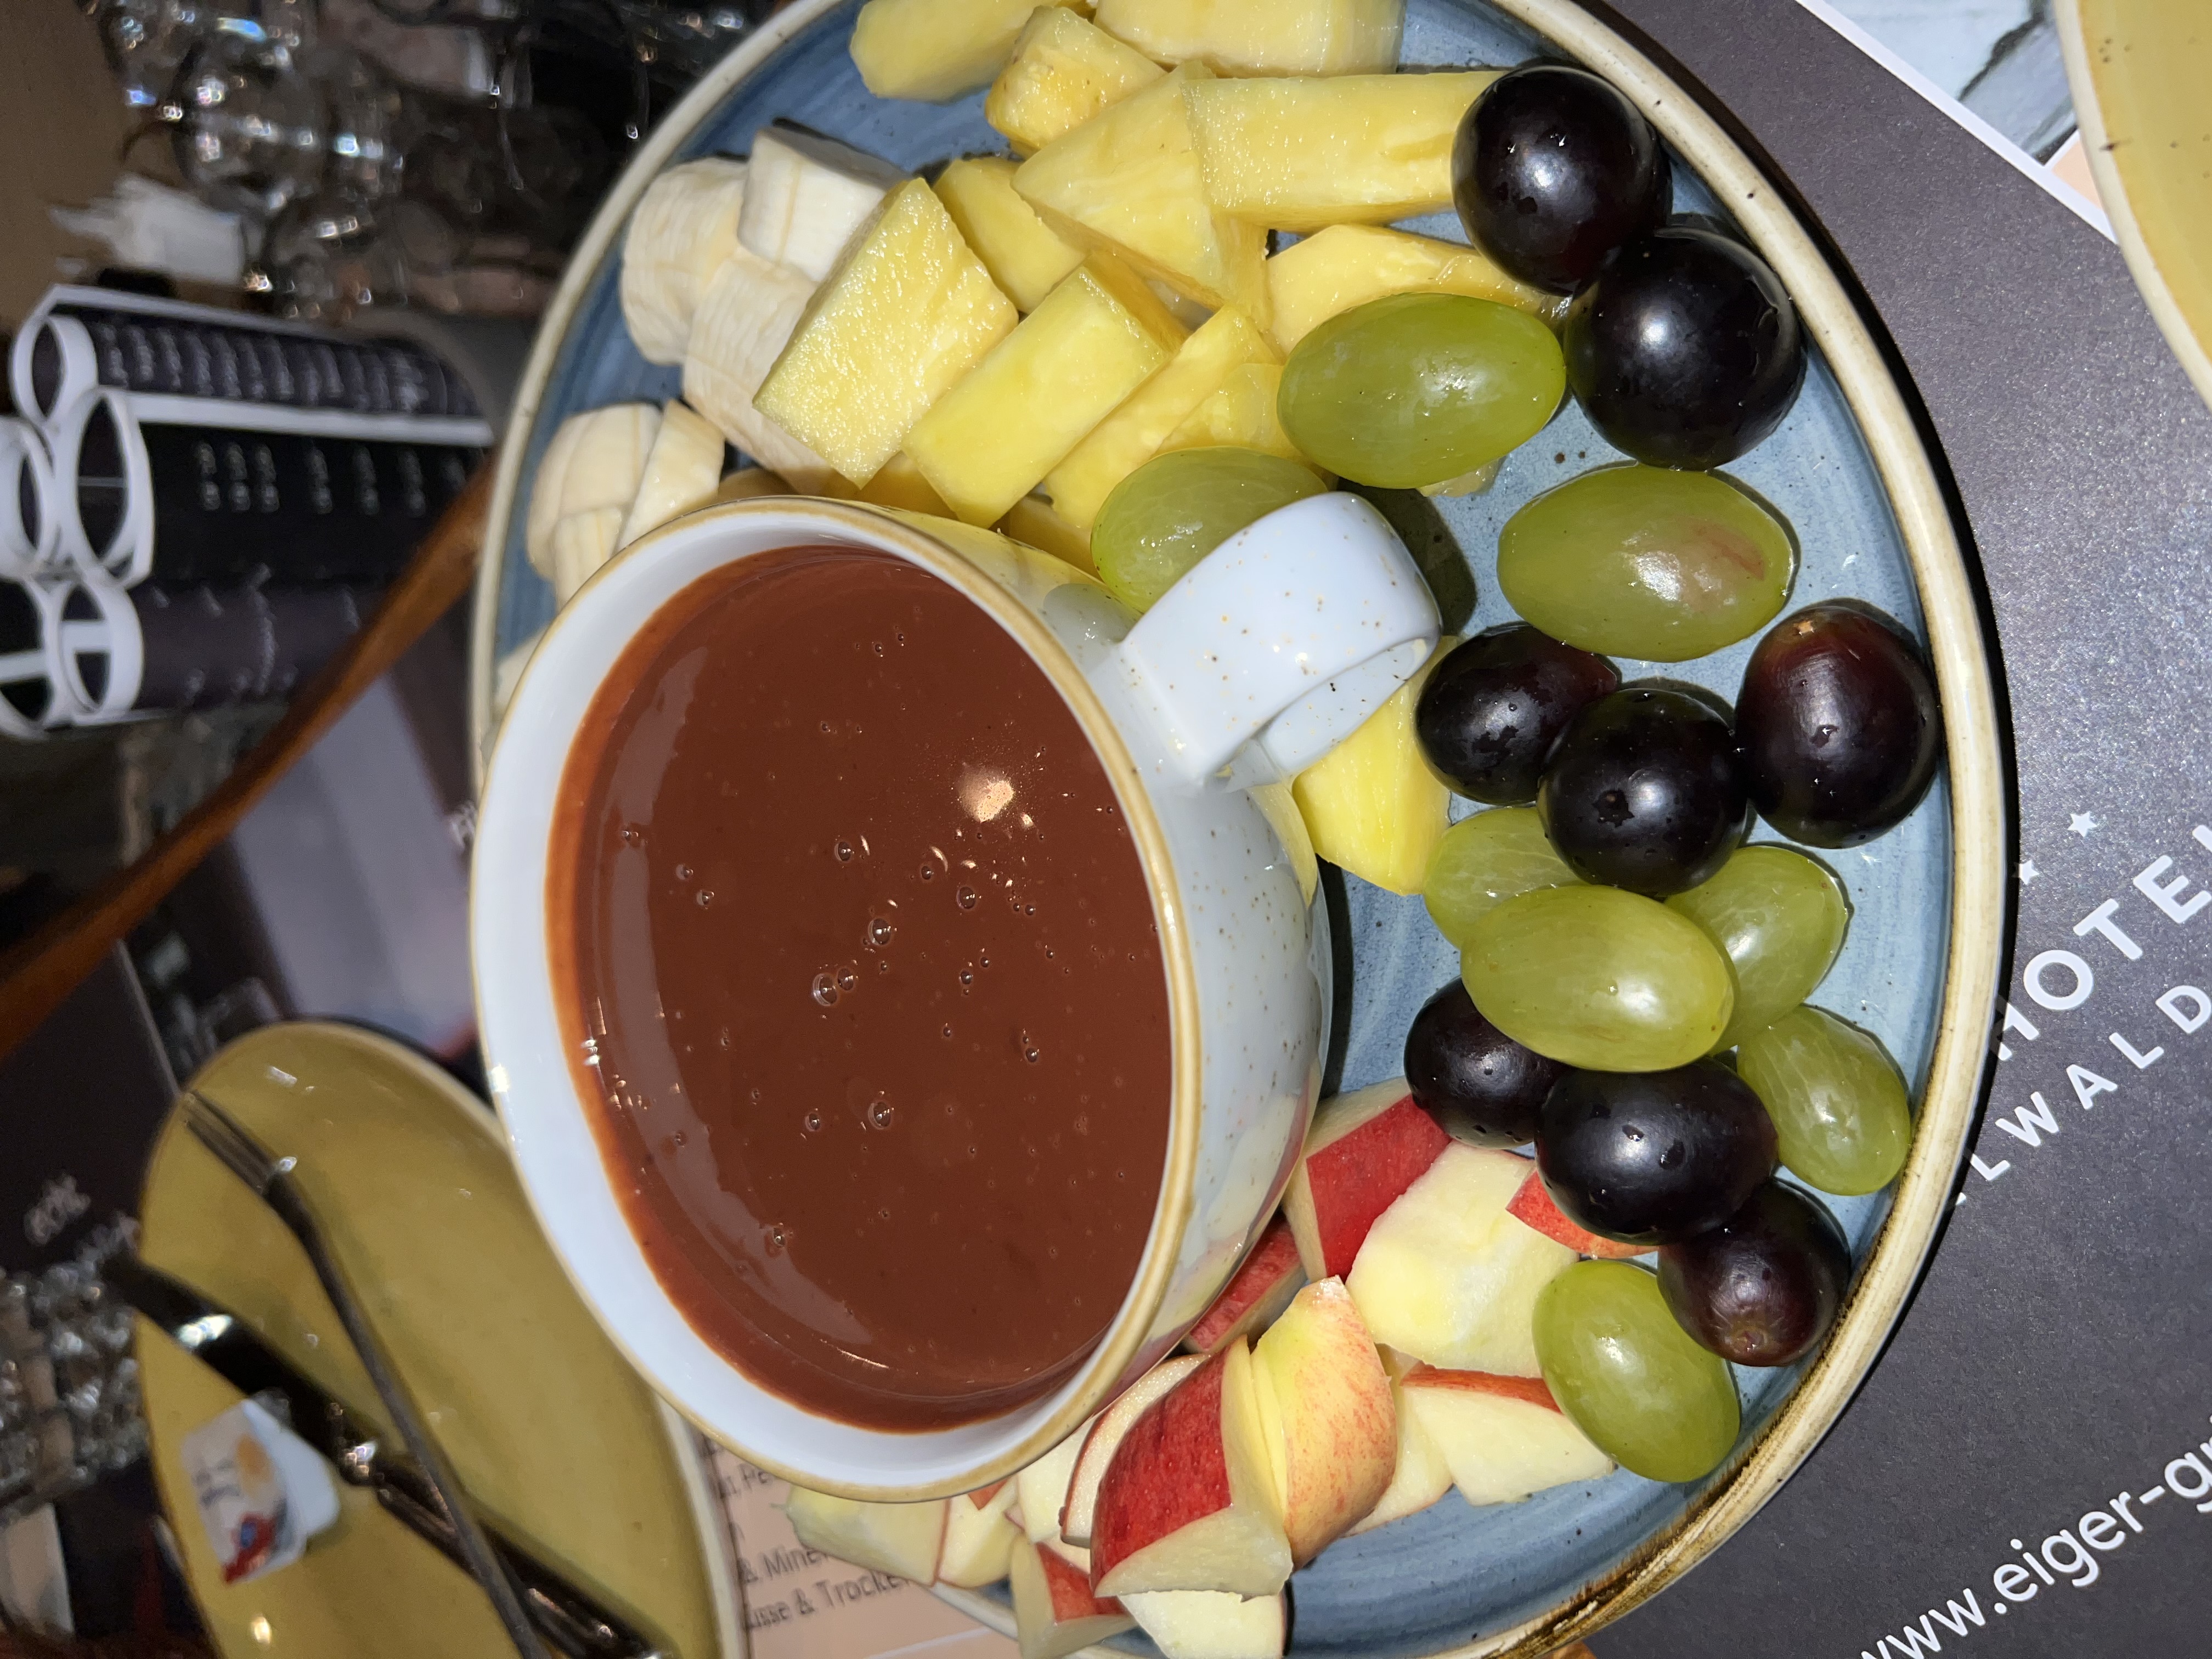 https://hips.hearstapps.com/hmg-prod/images/delish-chocolate-fondue-still001-1545405557.jpg